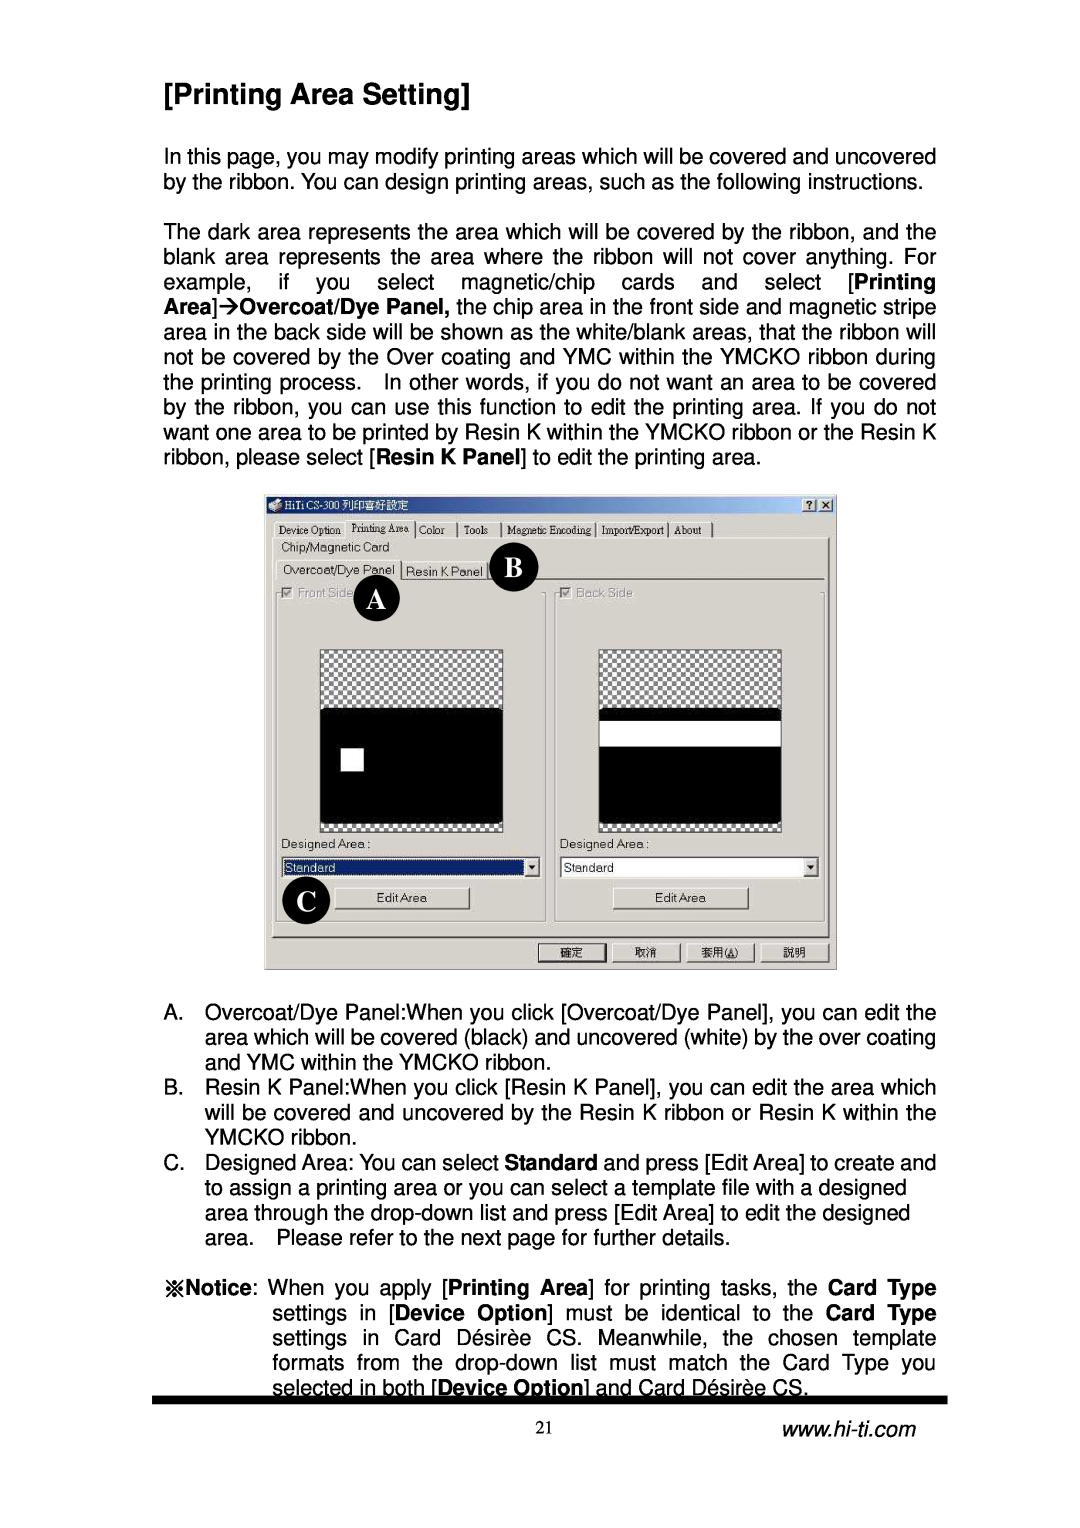 Hi-Touch Imaging Technologies CS-300 user manual Printing Area Setting, B A C 